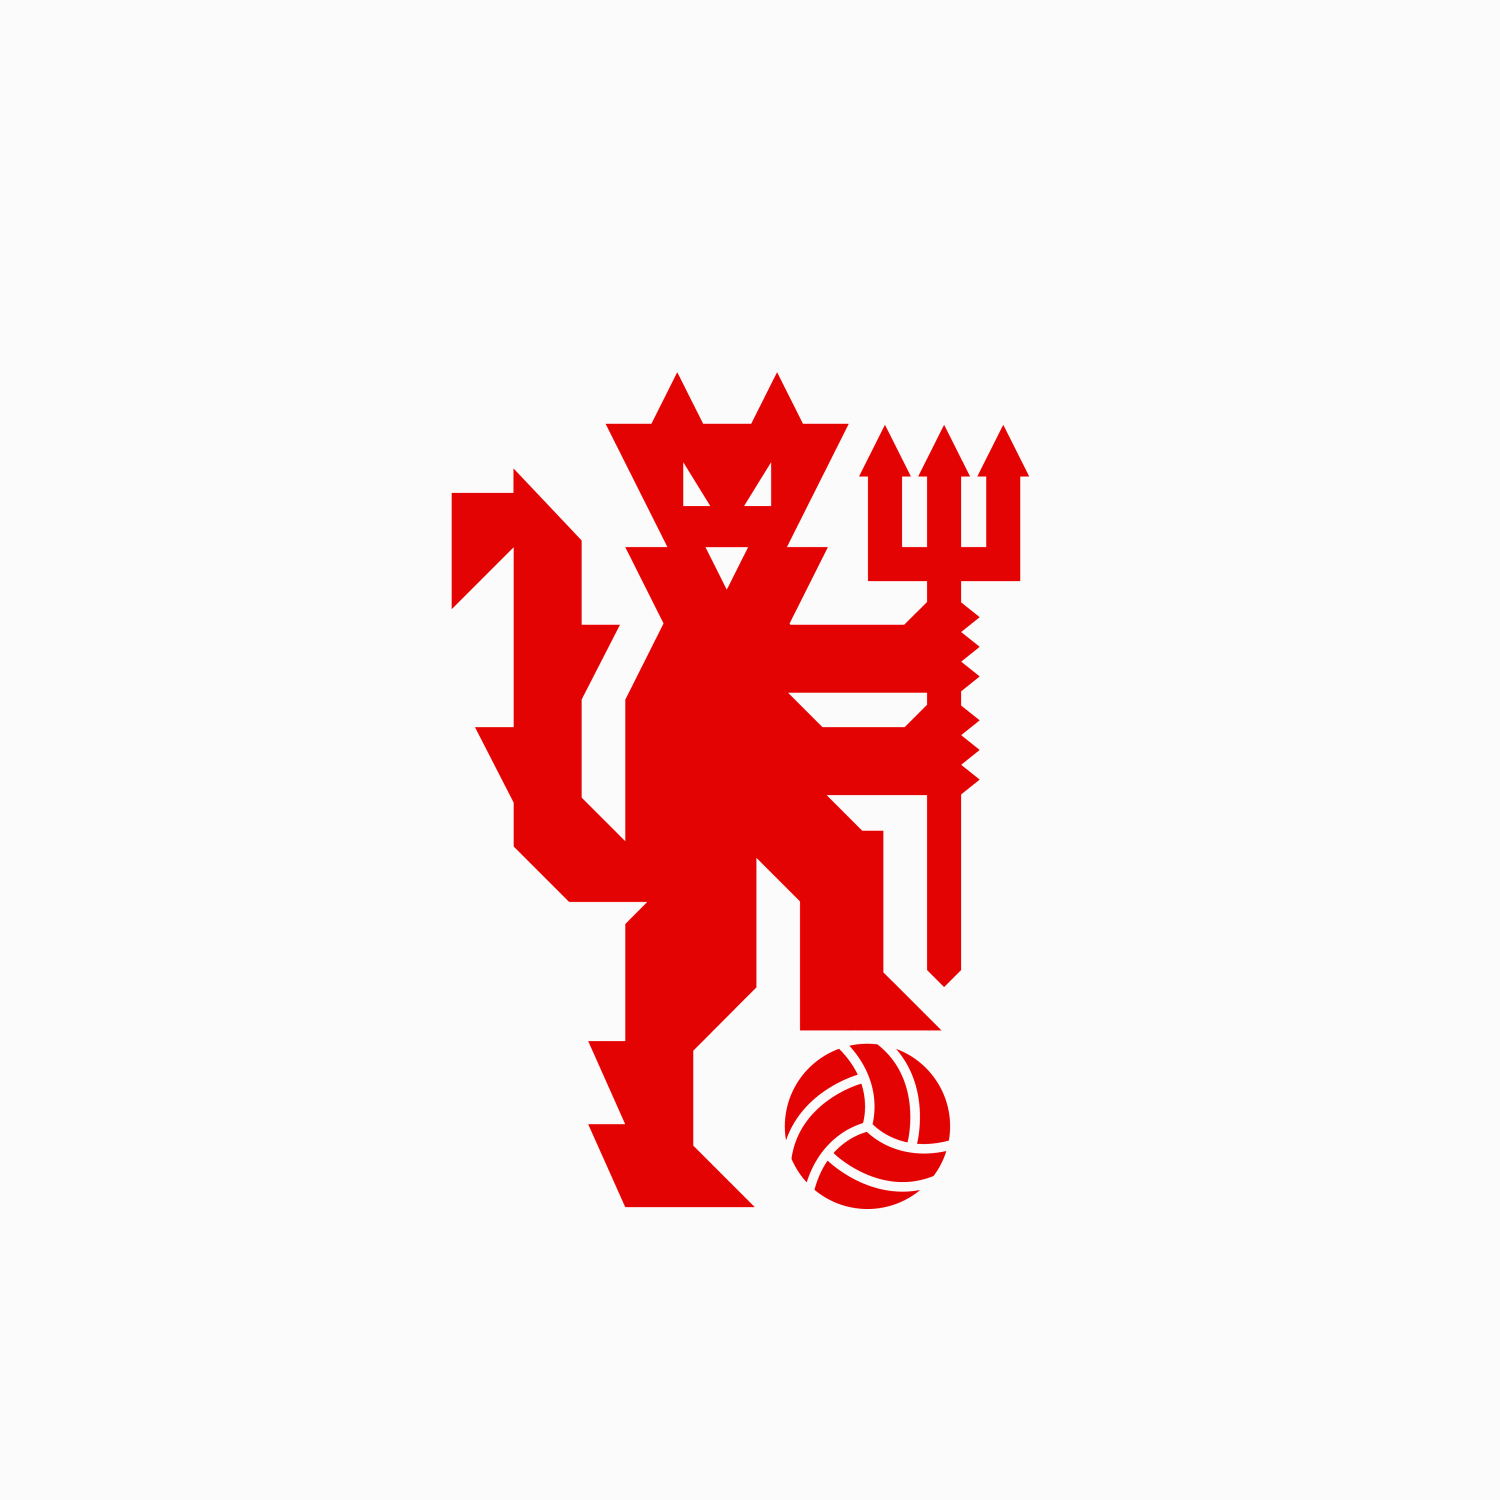 13+ Man Utd Red Devil Logo Png Gif